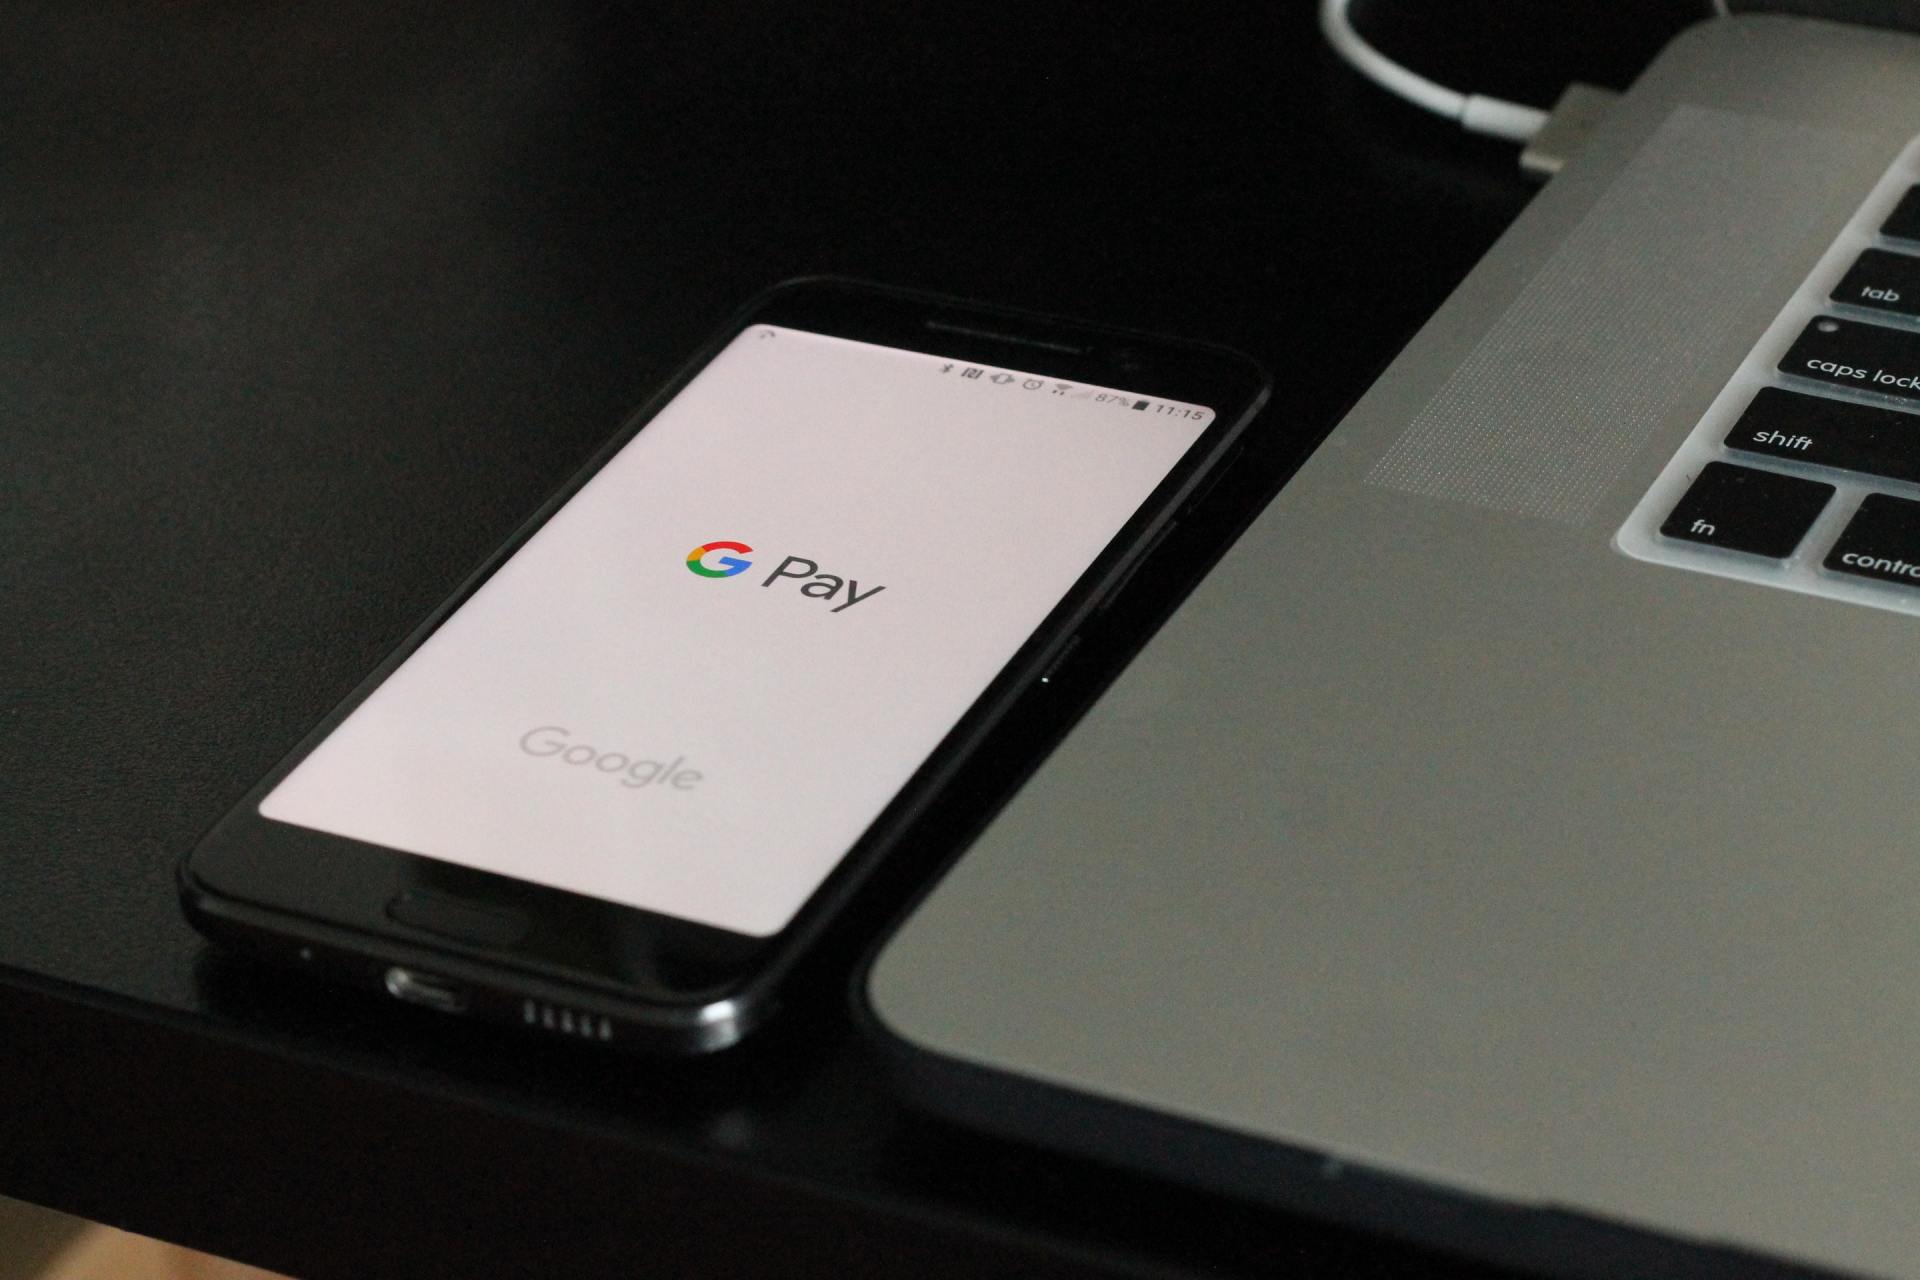 Phone Running Google Pay App